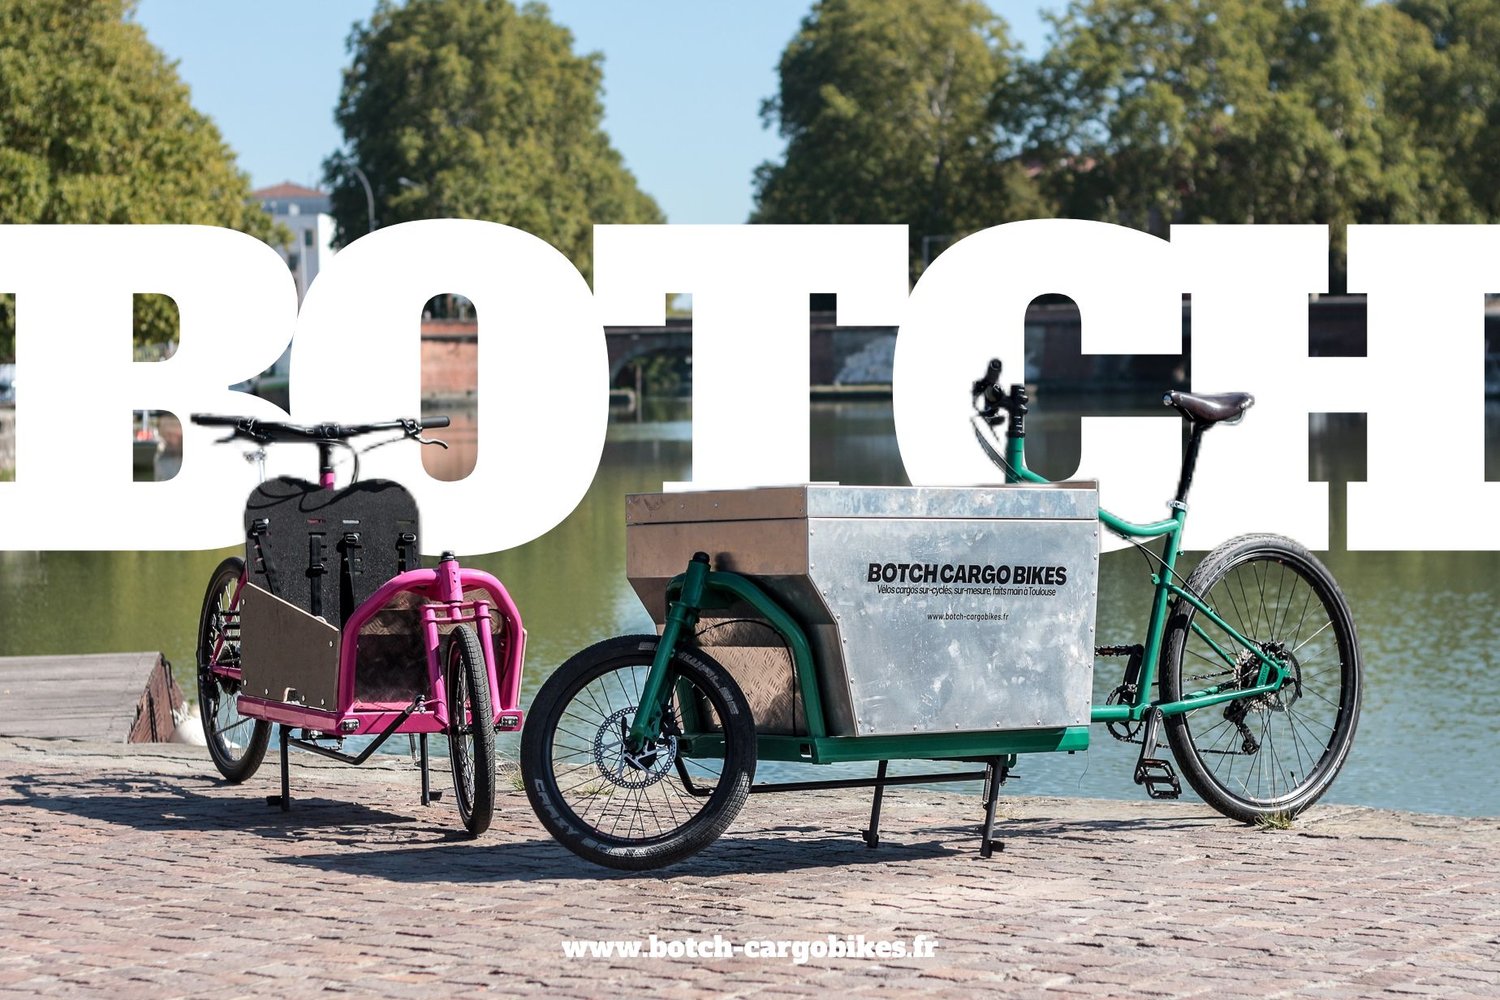 www.botch-cargobikes.fr